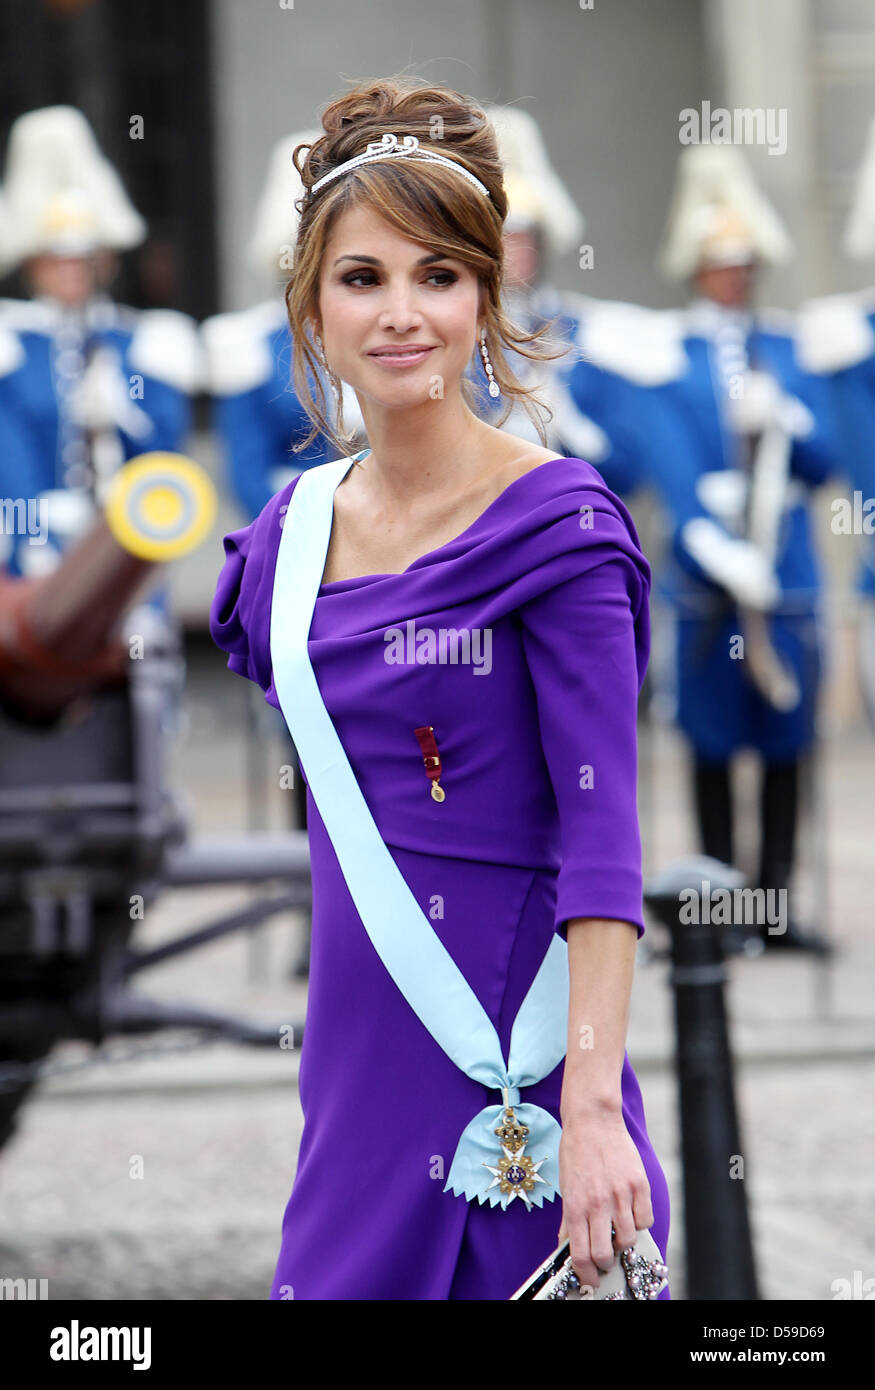 Queen rania jordan arrives wedding -Fotos und -Bildmaterial in hoher  Auflösung – Alamy